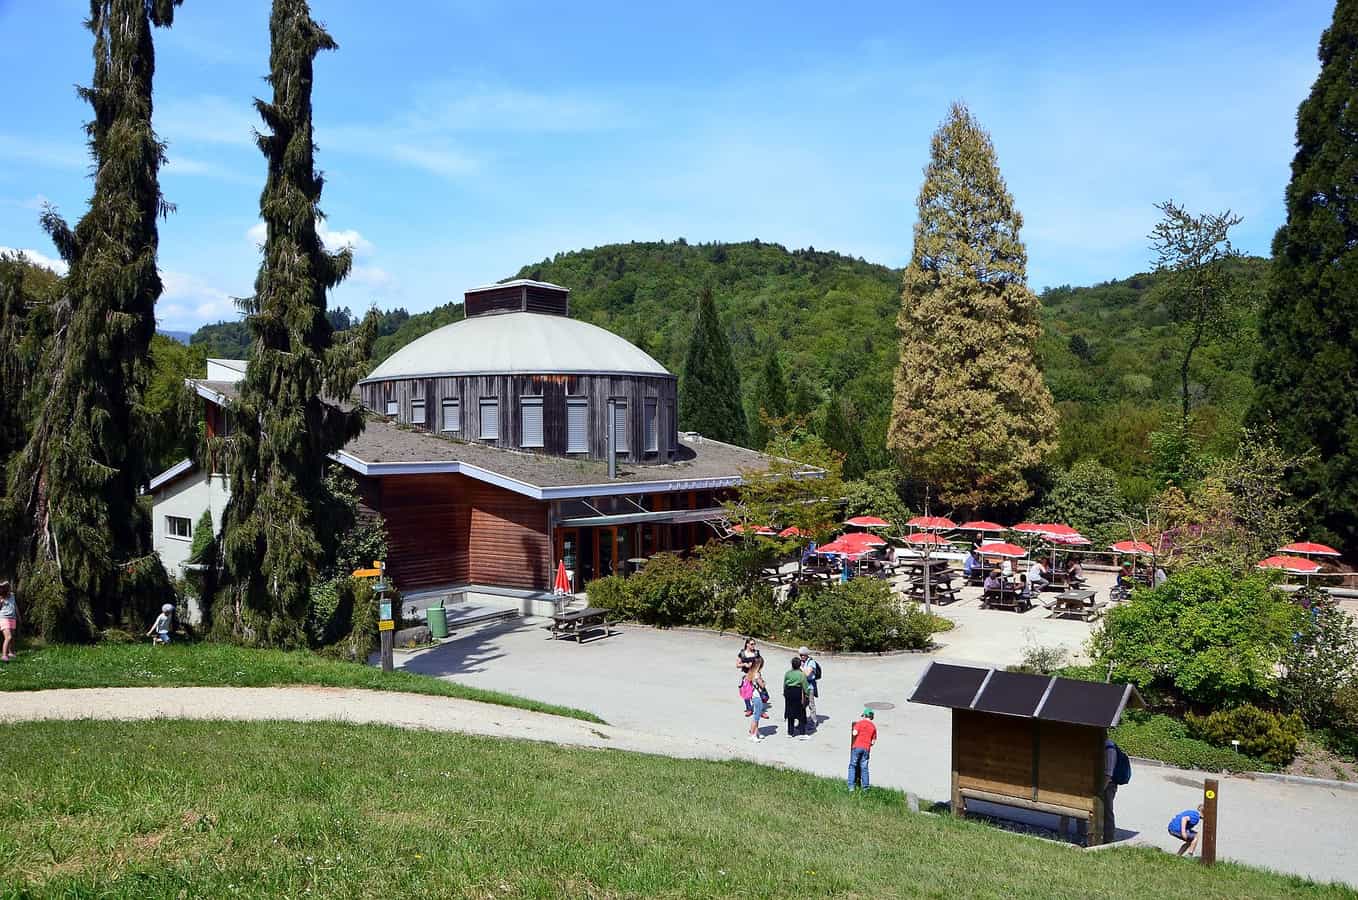 The Arbr'espace, management and reception centre of the Aubonne's valley's arboretum